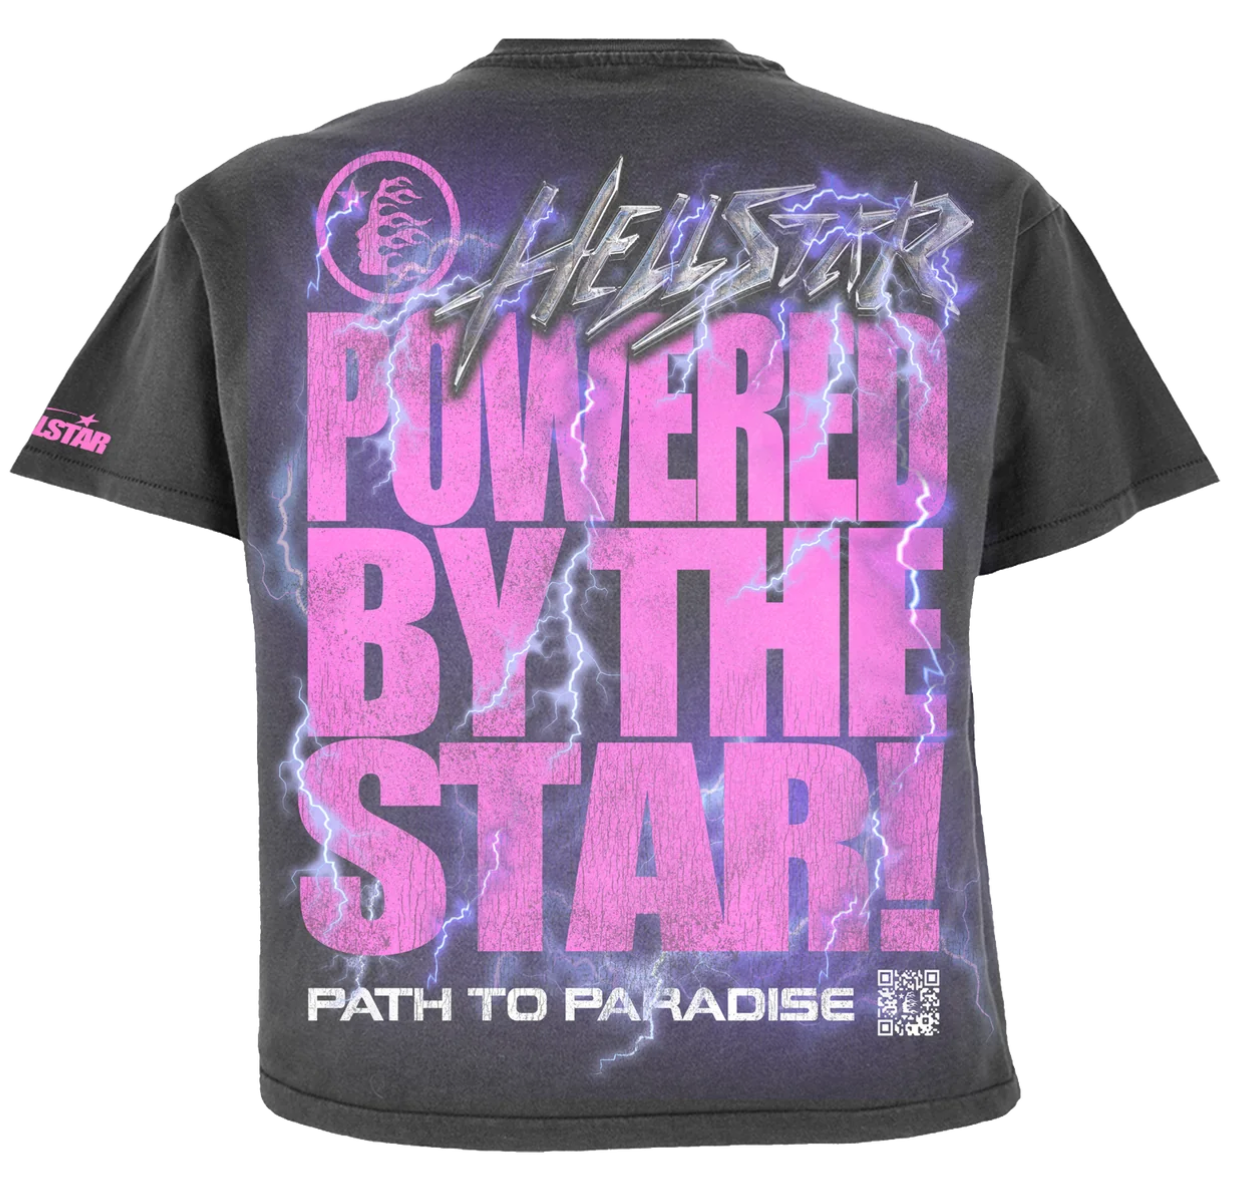 Hellstar Studios Powered By The Star T-Shirt PALISADES